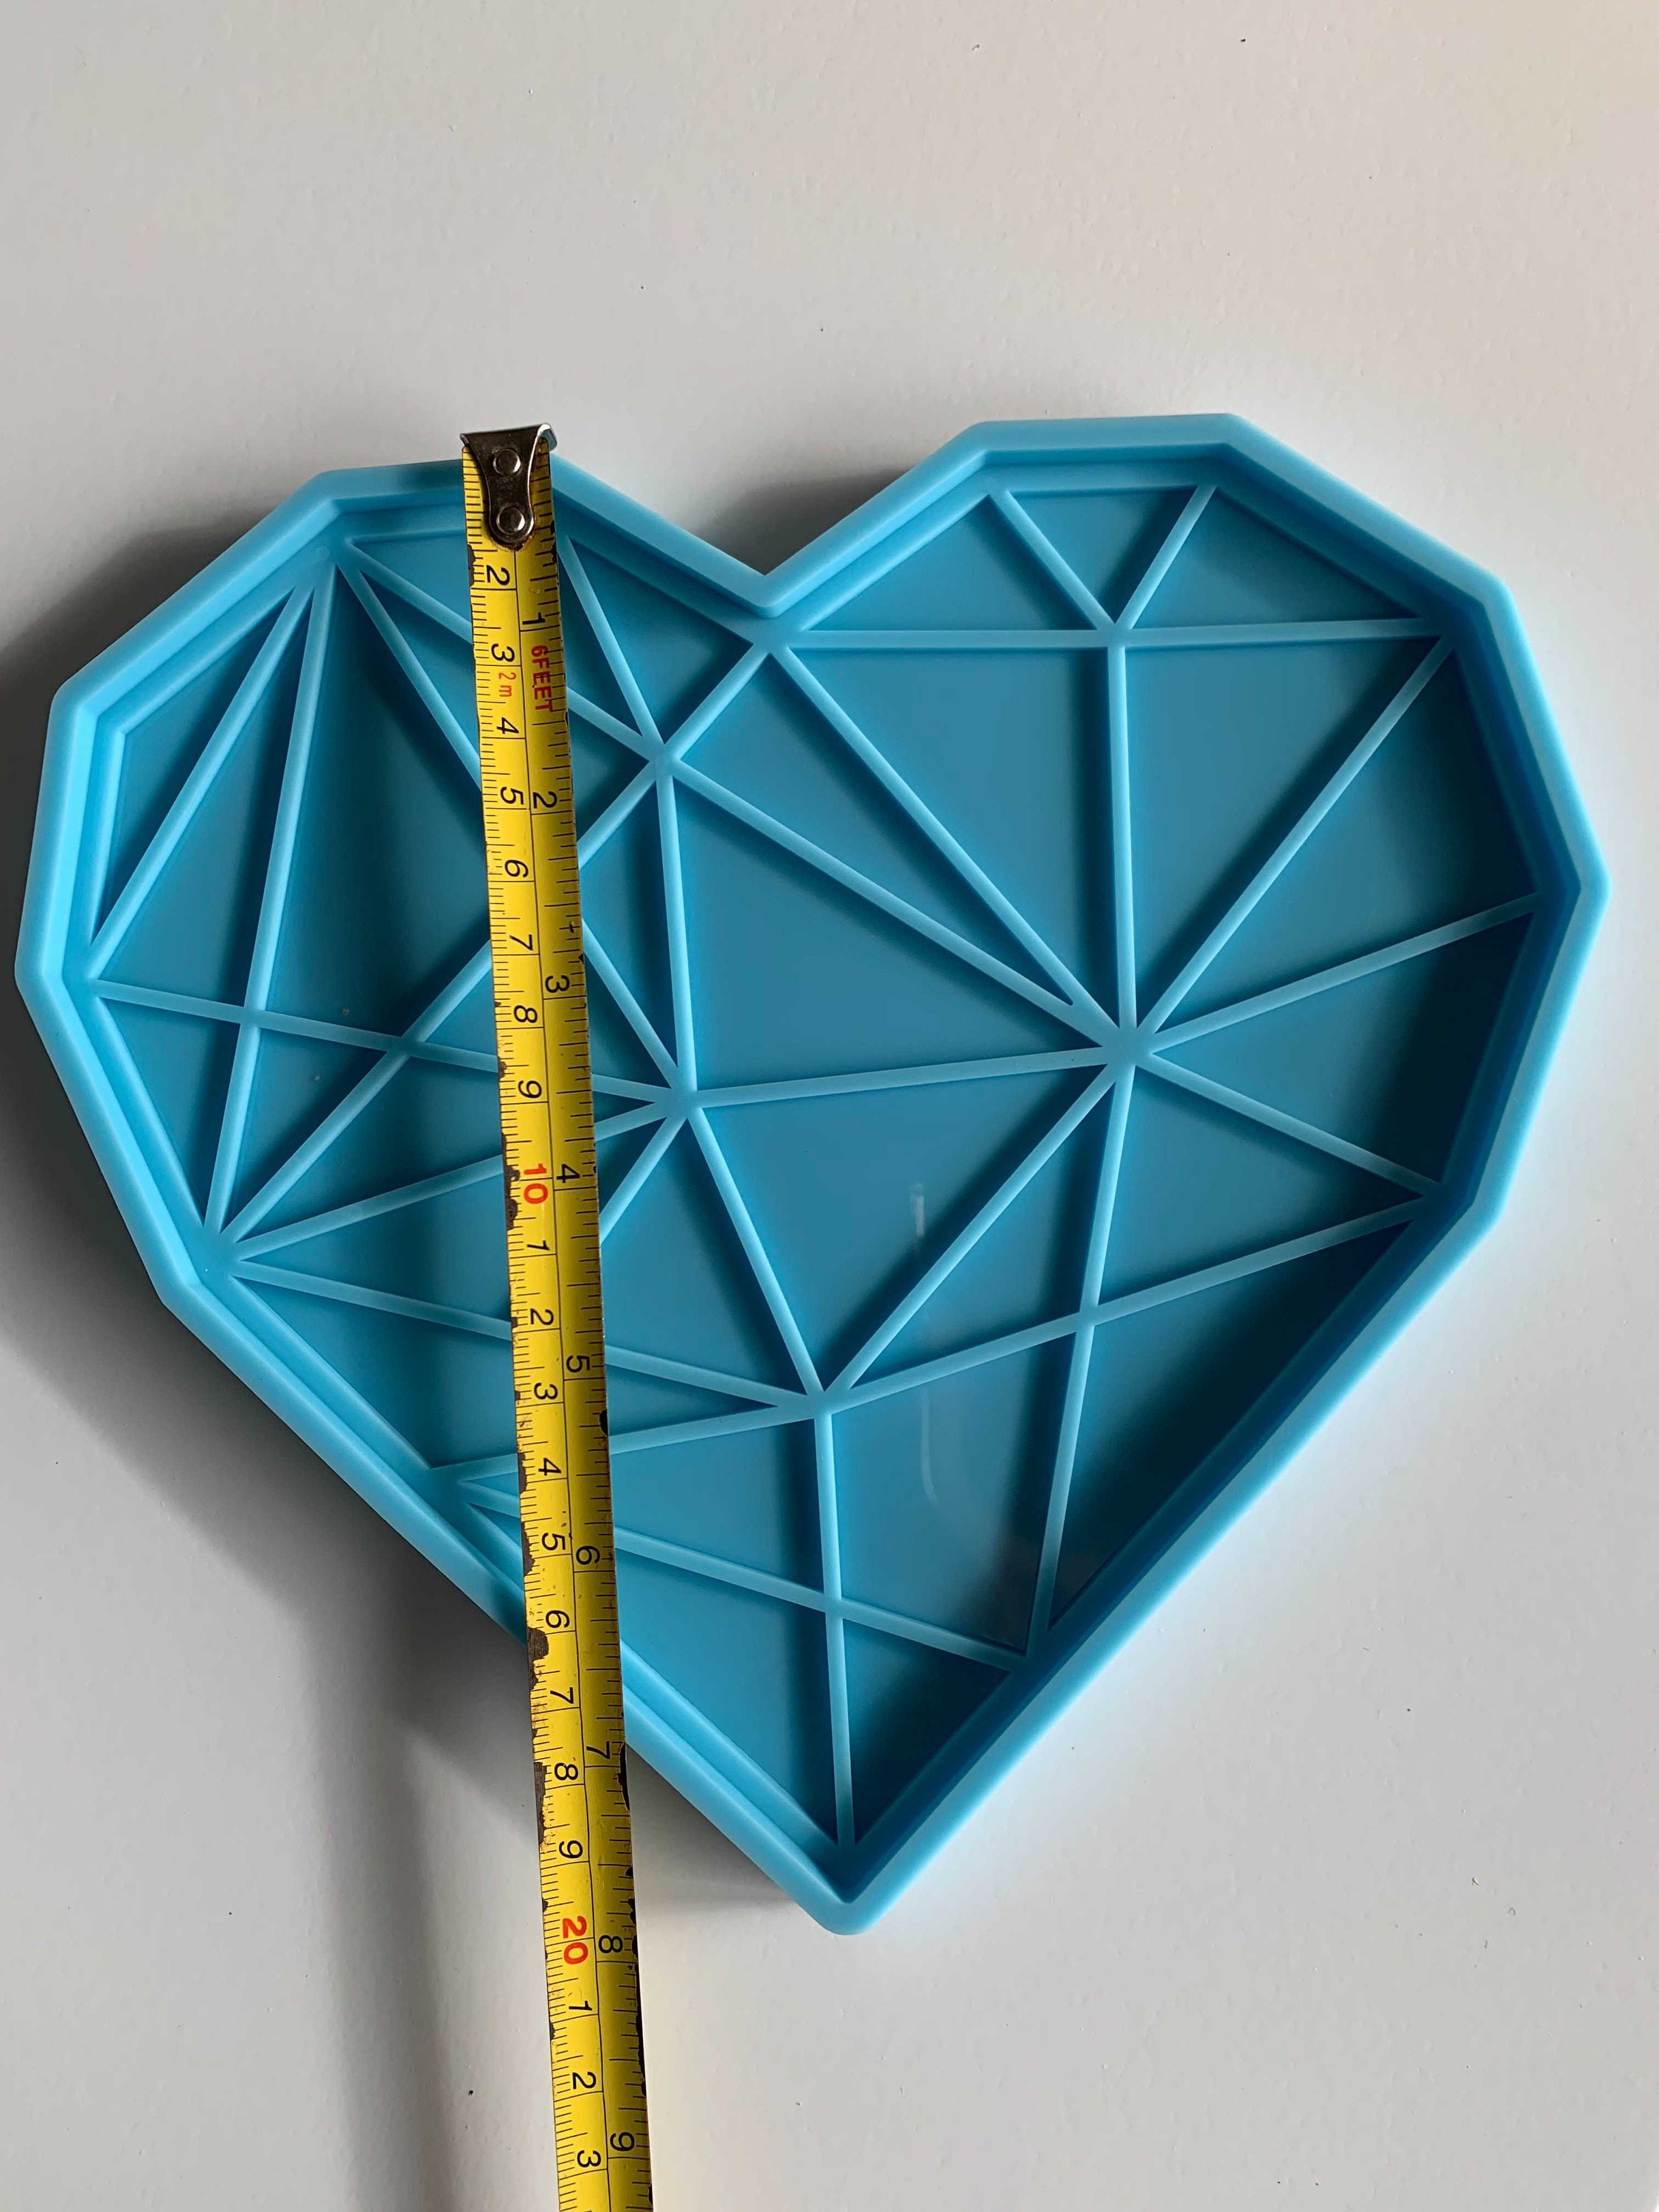 Geometric Heart Silicone Mold-Love Heart Resin Mold-Heart Shaped Keychain  Mold-Heart Jewelry Pendant Mold-Epoxy Resin Mold